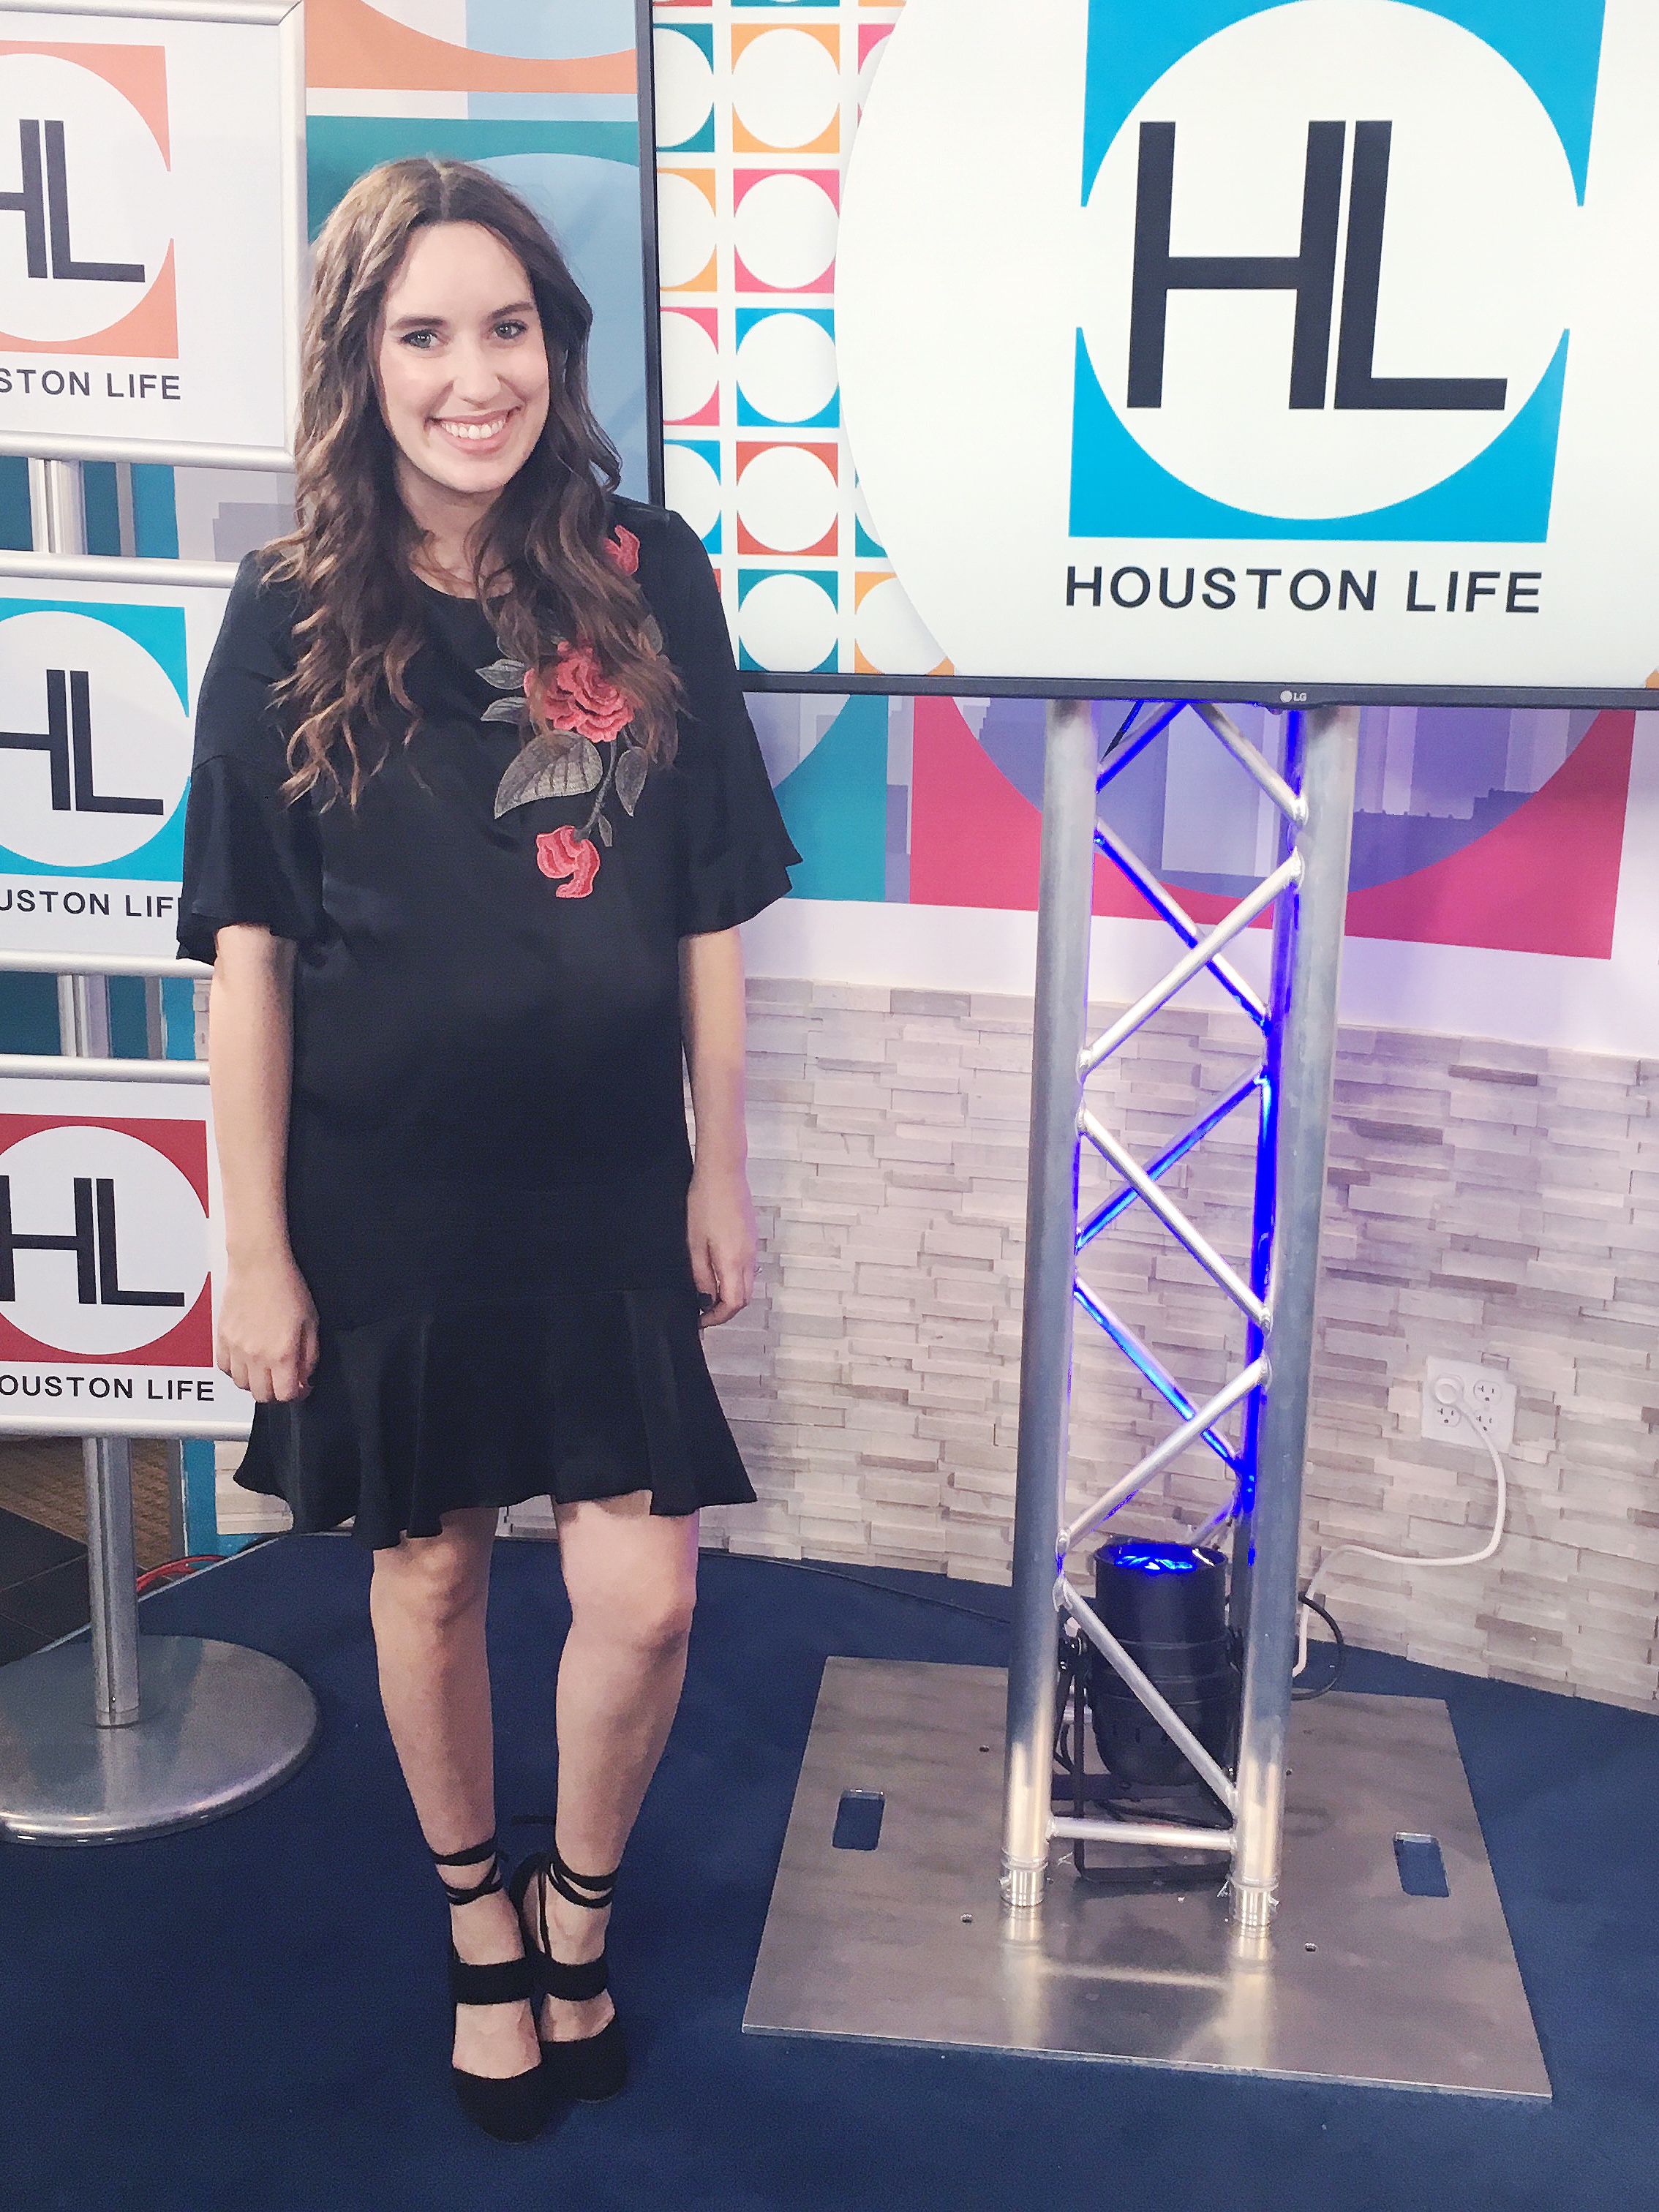 Houston fashion blogger Alice Kerley shares a holiday style segment on Houston Life on KPRC Click2Houston.